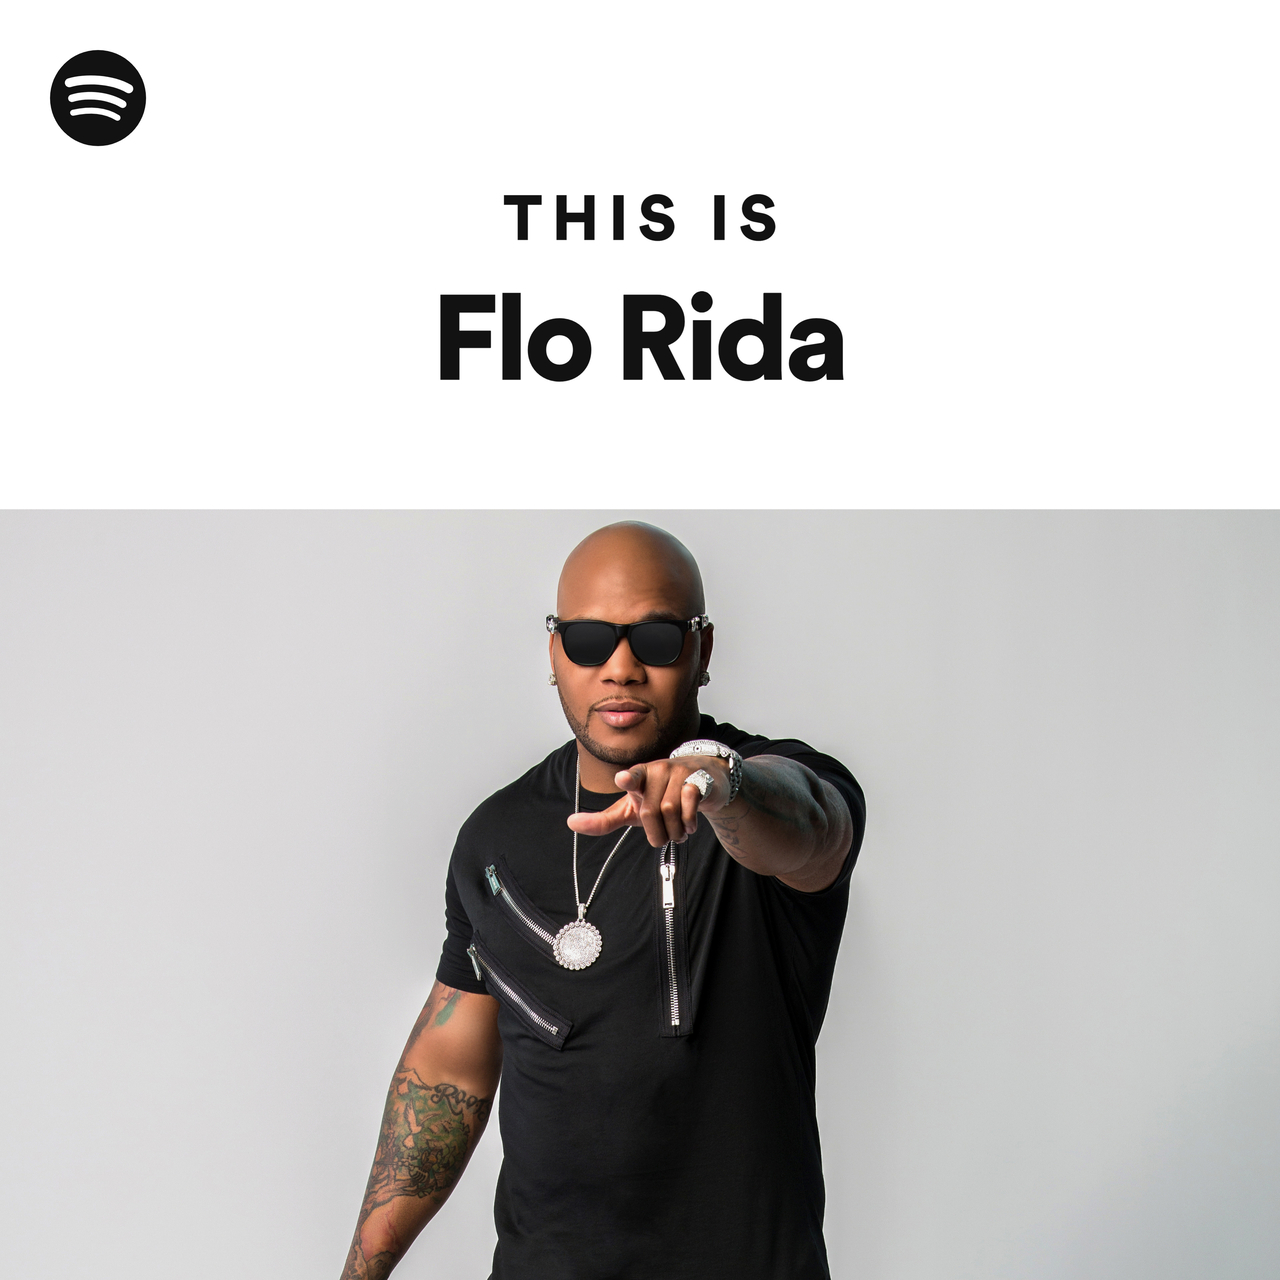 Flo Rida